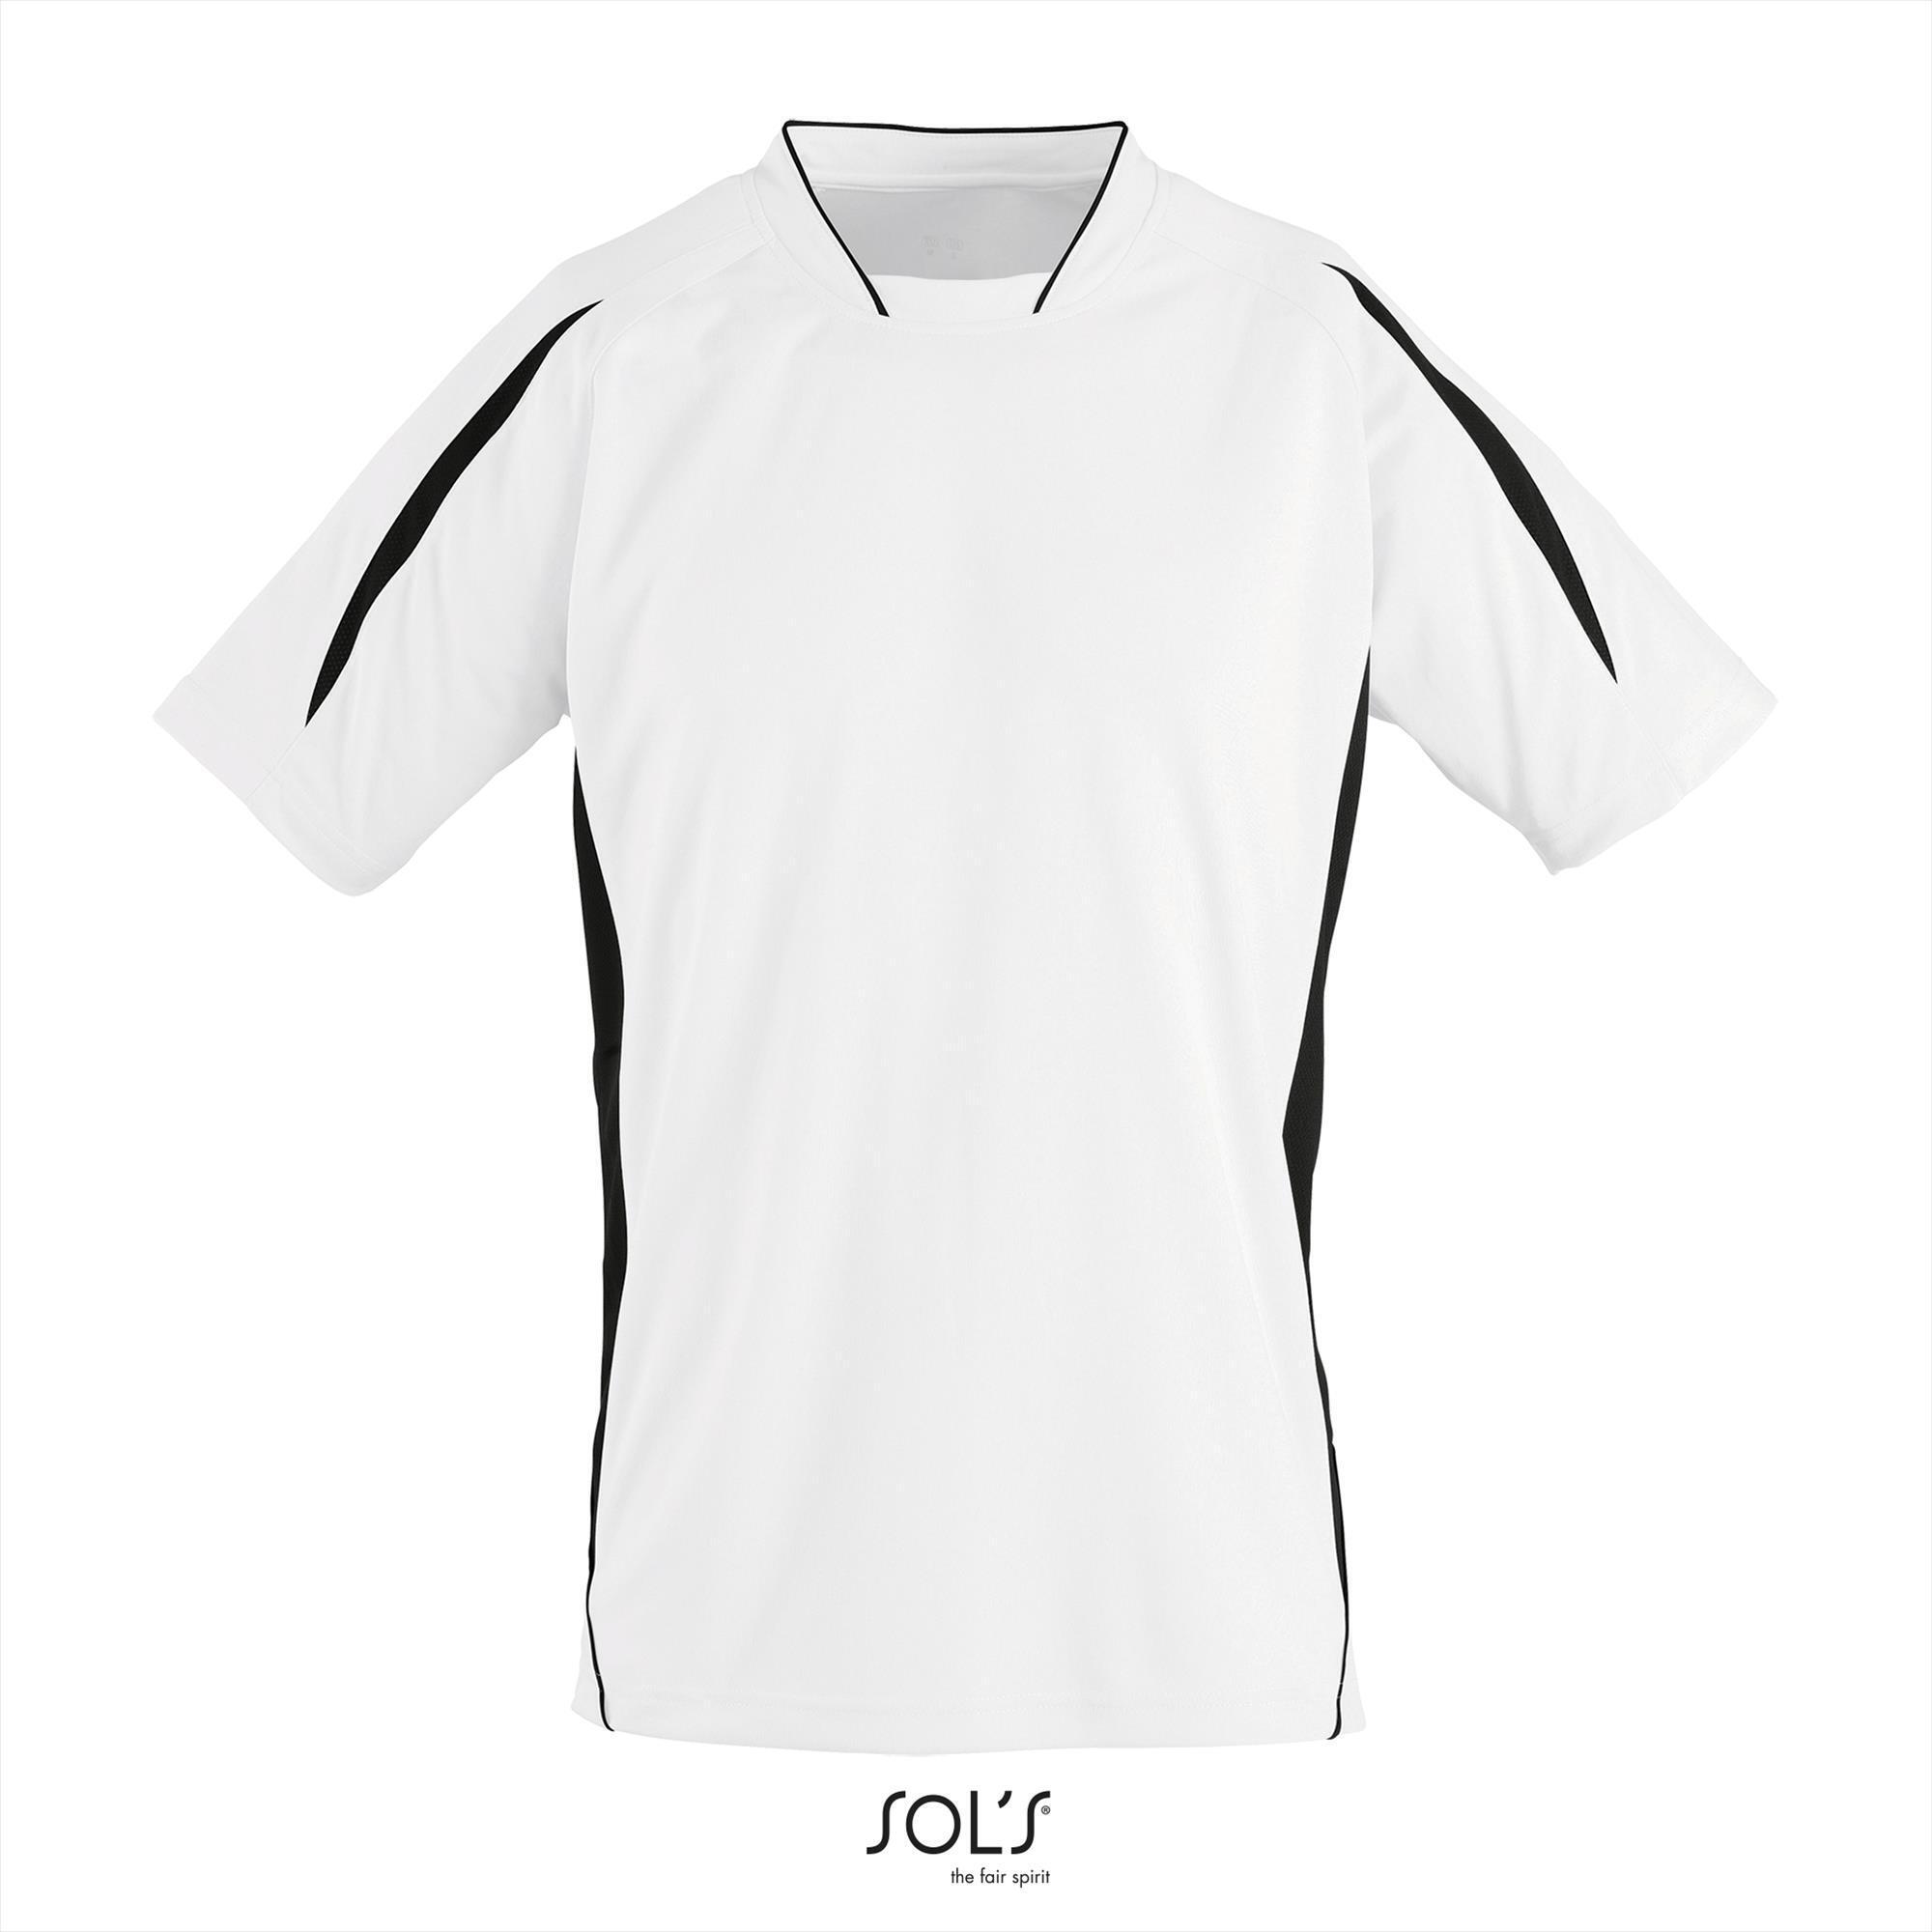 Kinder sportshirt wit met zwart sportief sport shirt personaliseren sport shirt